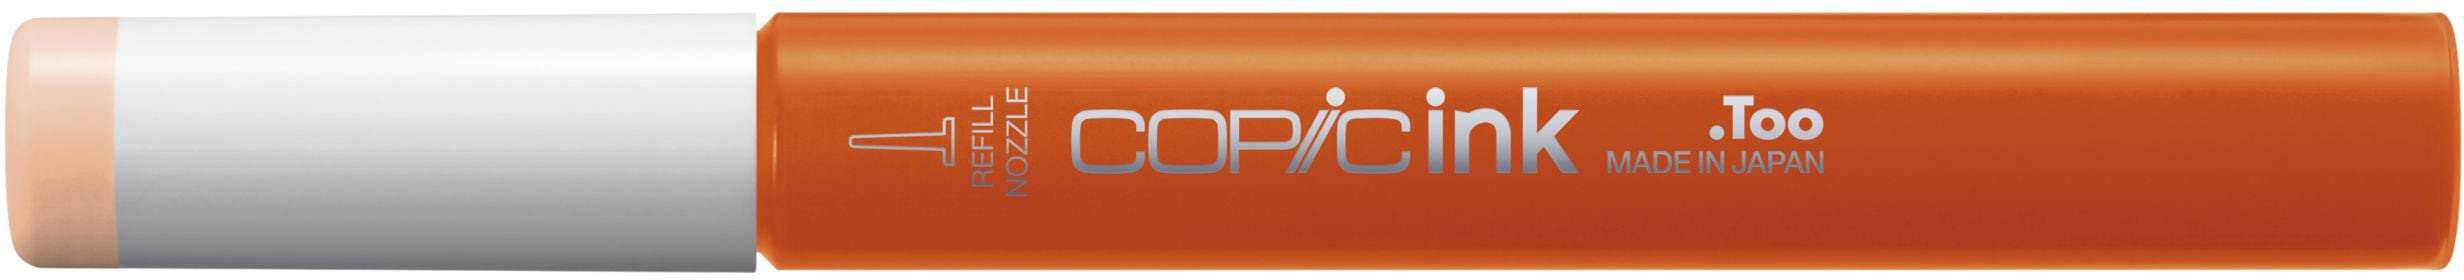 COPIC Ink Refill 21076278 YR61 - Spring orange